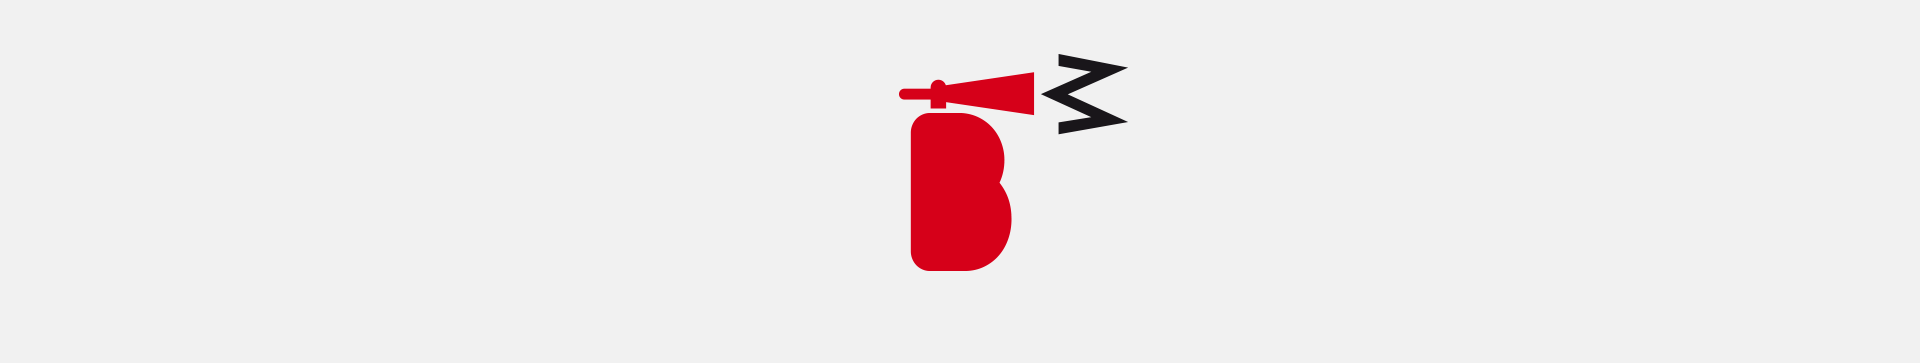 logotipo extintores